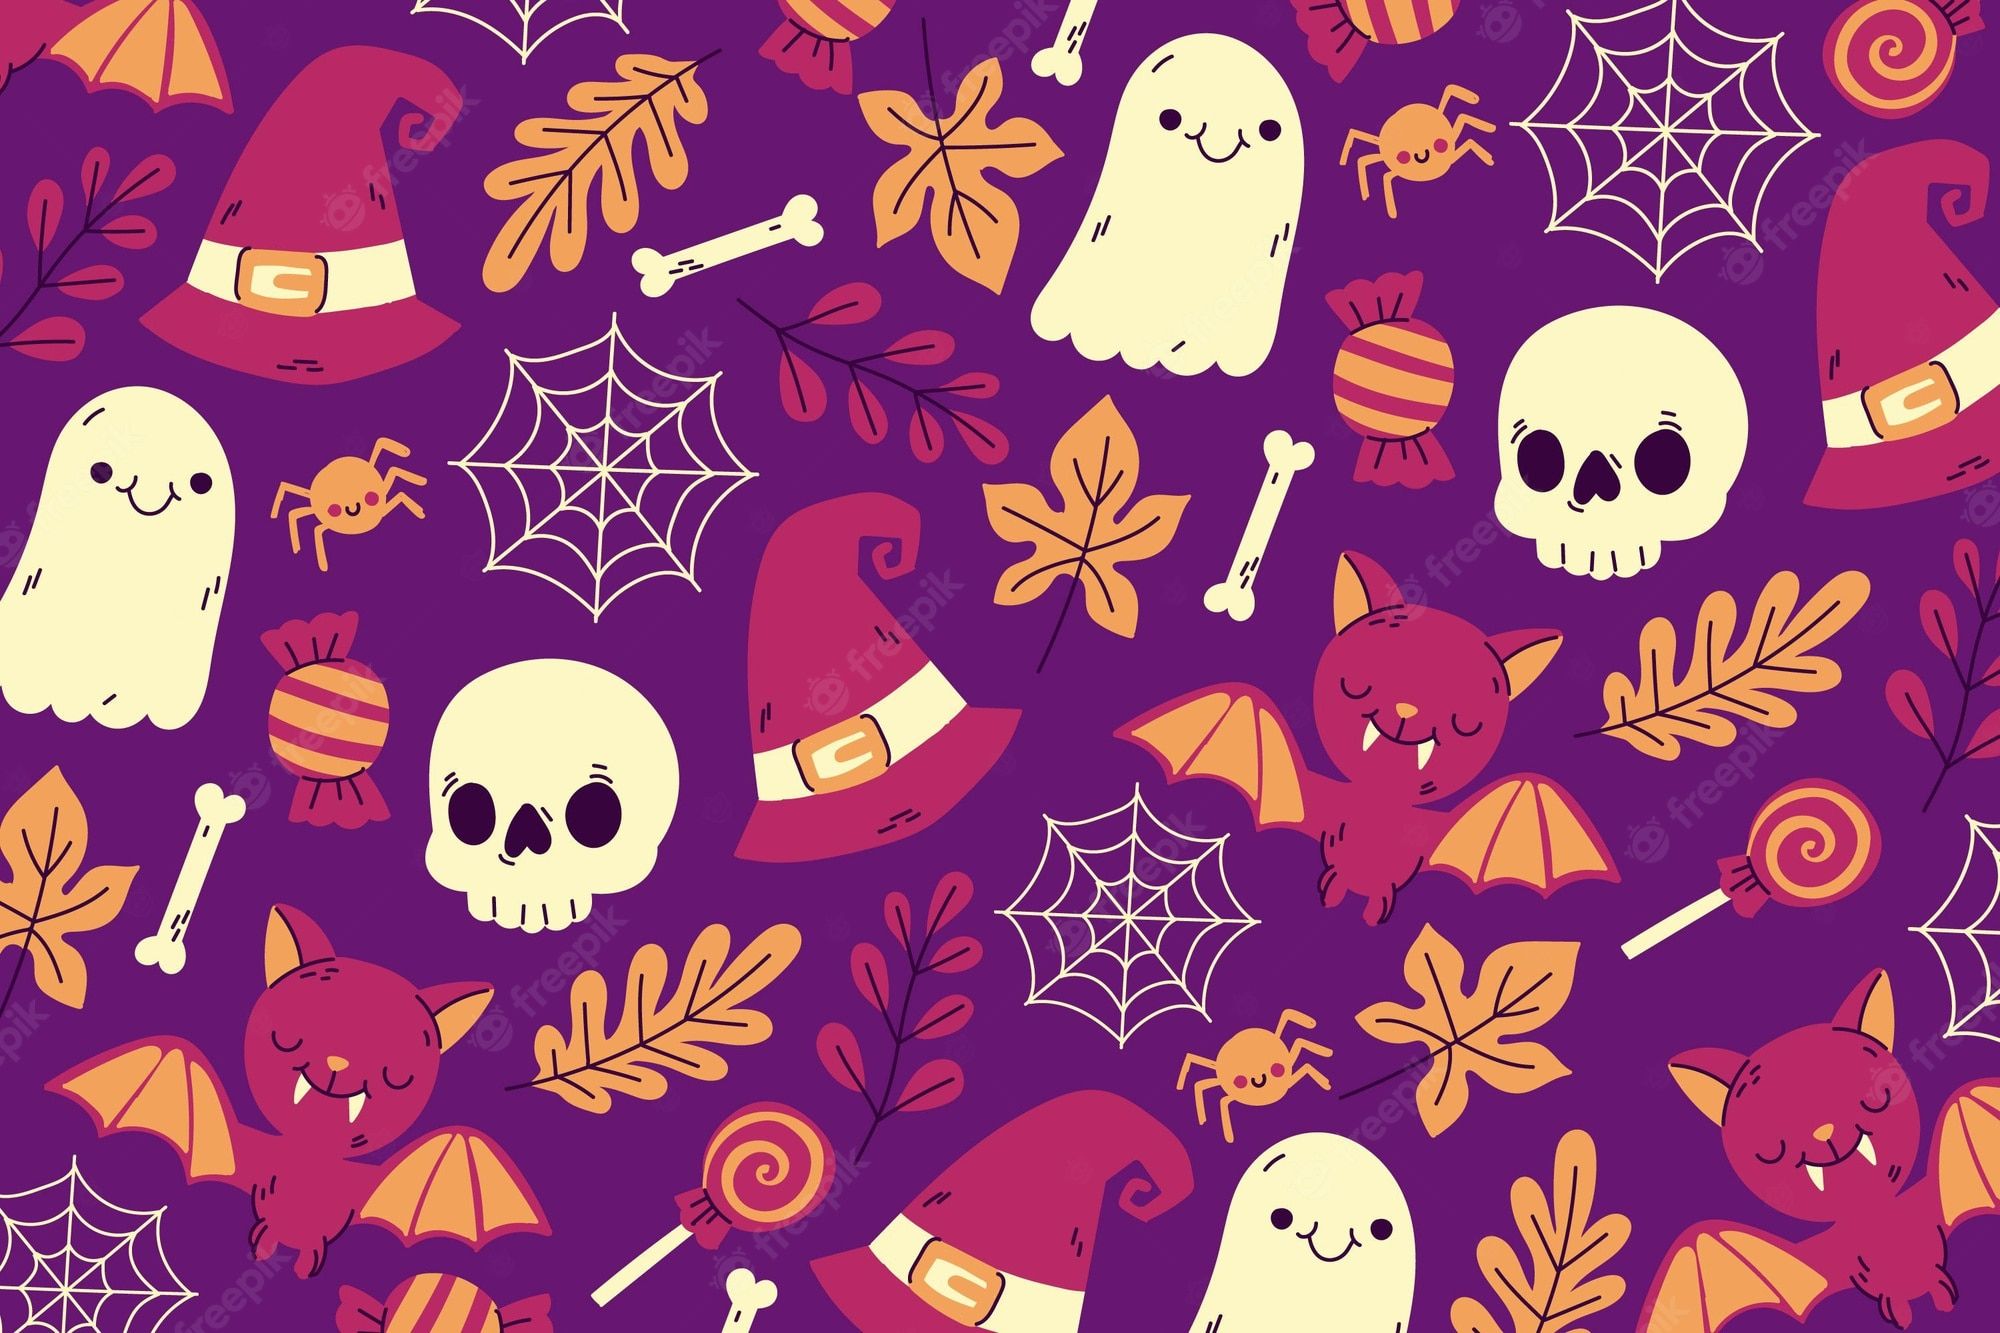 Halloween seamless pattern with pumpkins, bats, ghosts, skulls, spiders, and candies on a purple background. - Halloween desktop